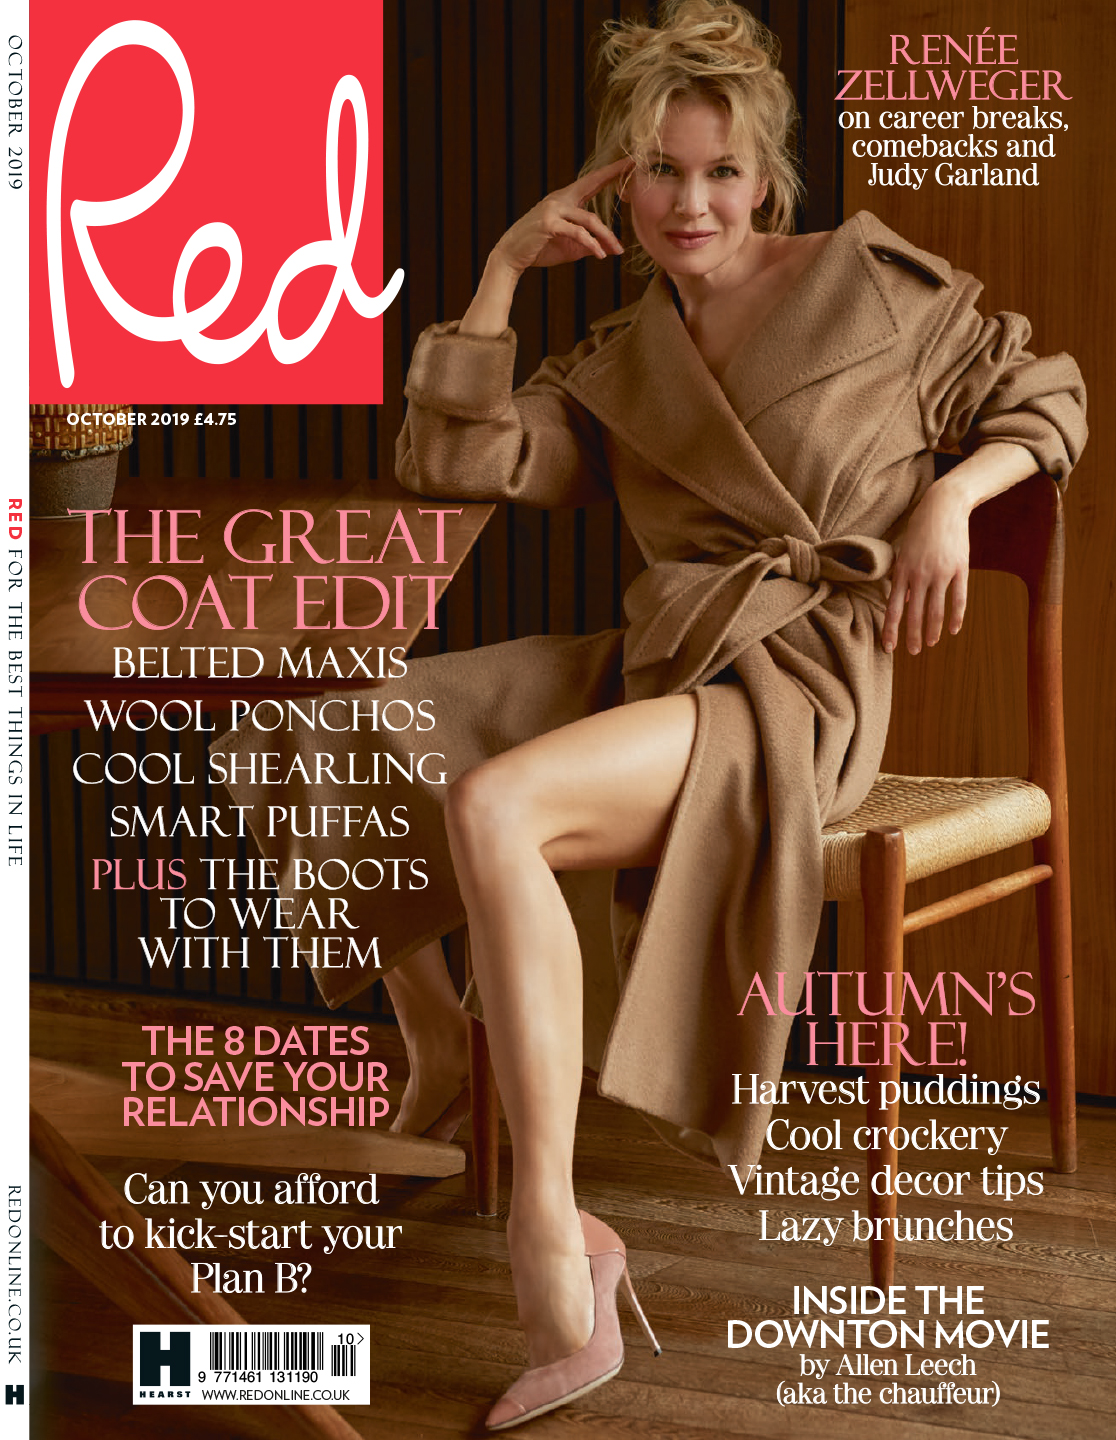 Renee-Zellweger-for-Red-cover